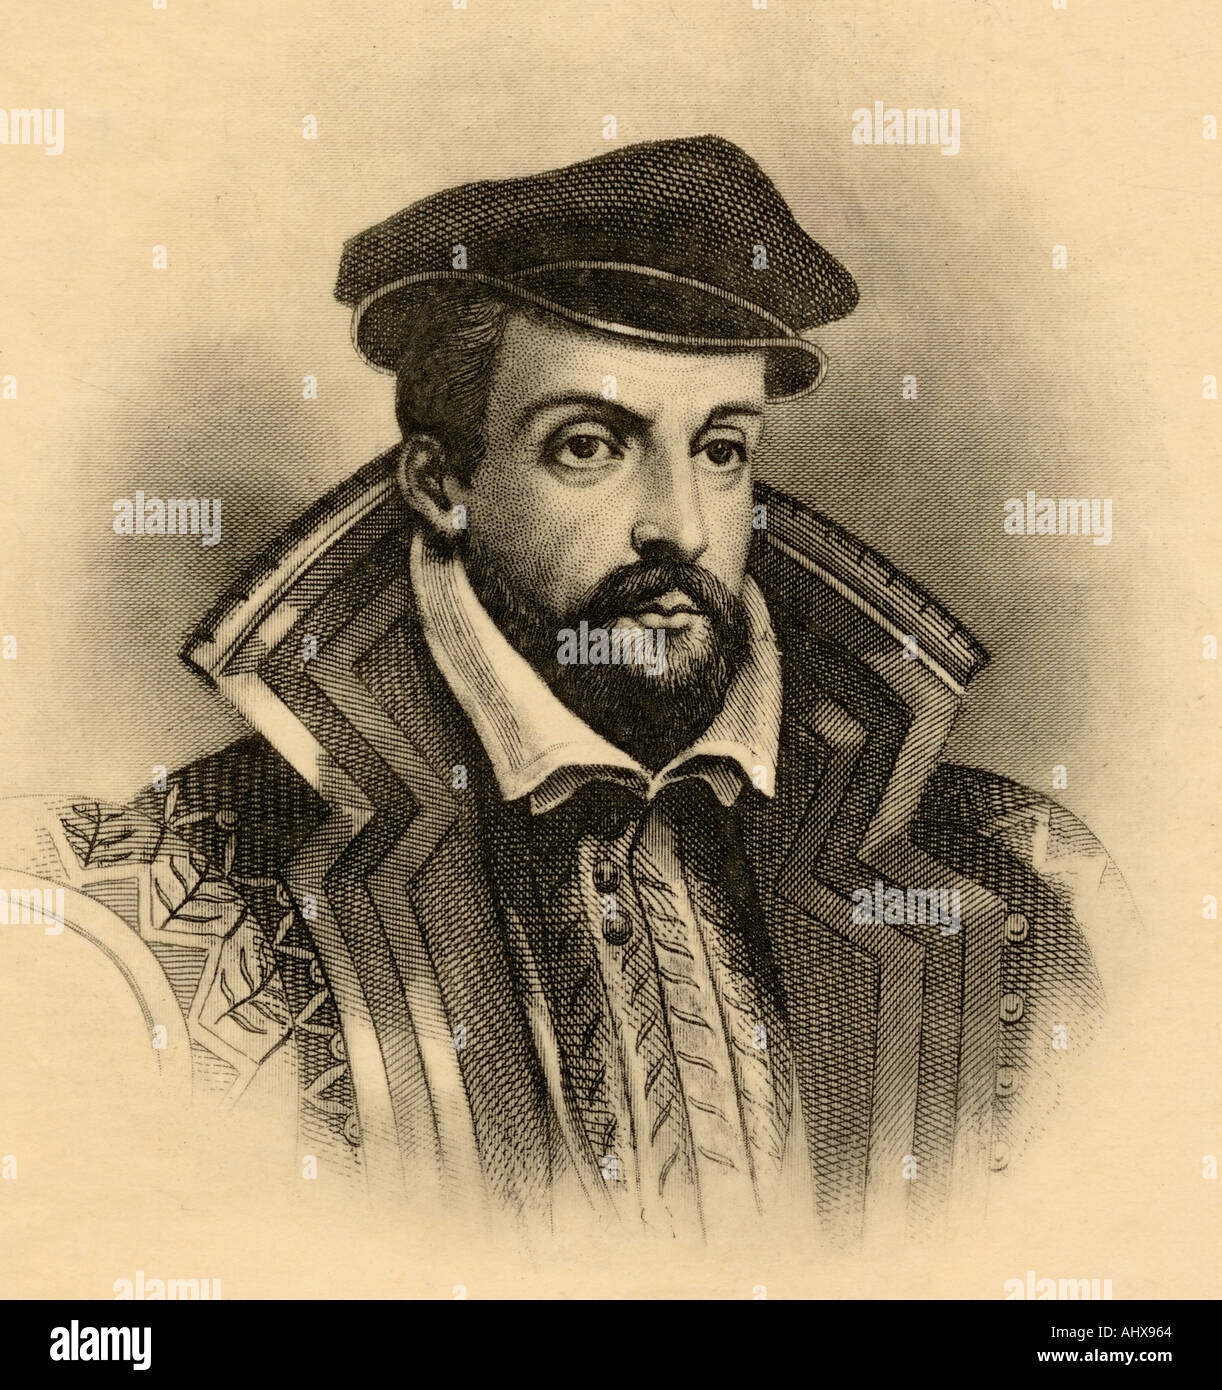 Gaspard de Coligny, Seigneur de Chatillon, 1519 - 1572. French nobleman, admiral and Protestant leader. Stock Photo